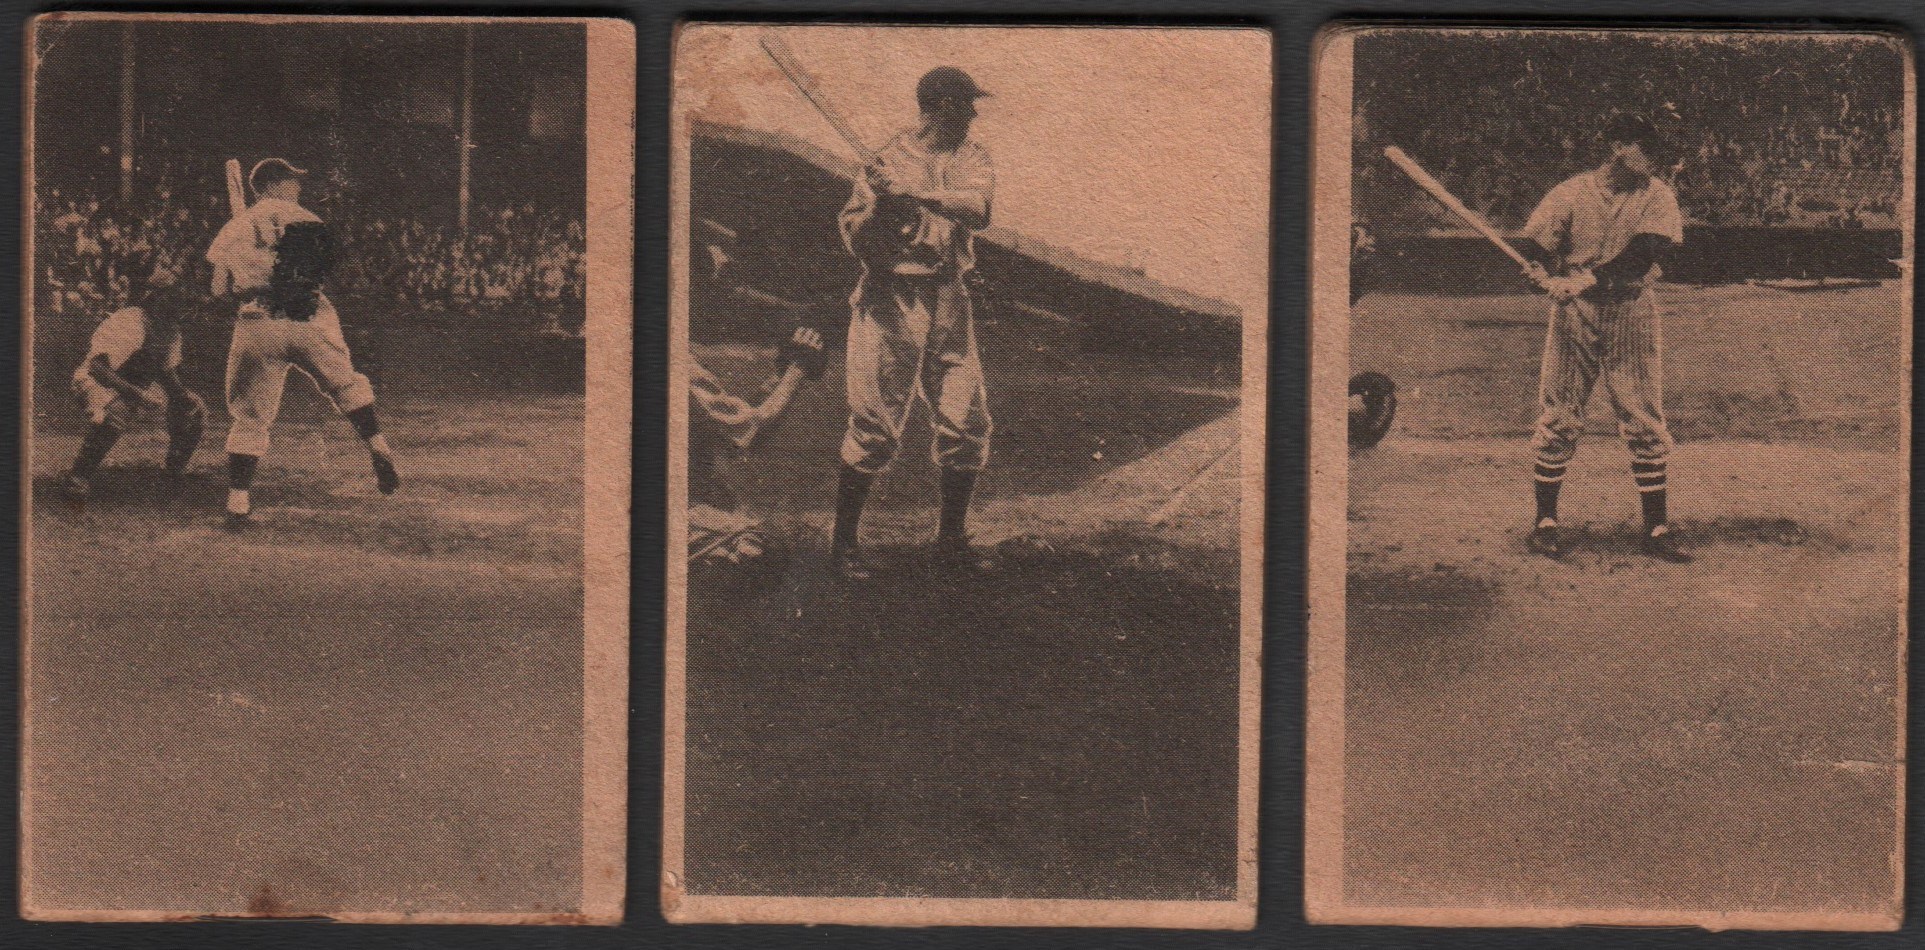 - 1930s Baseball Flip Book Trio